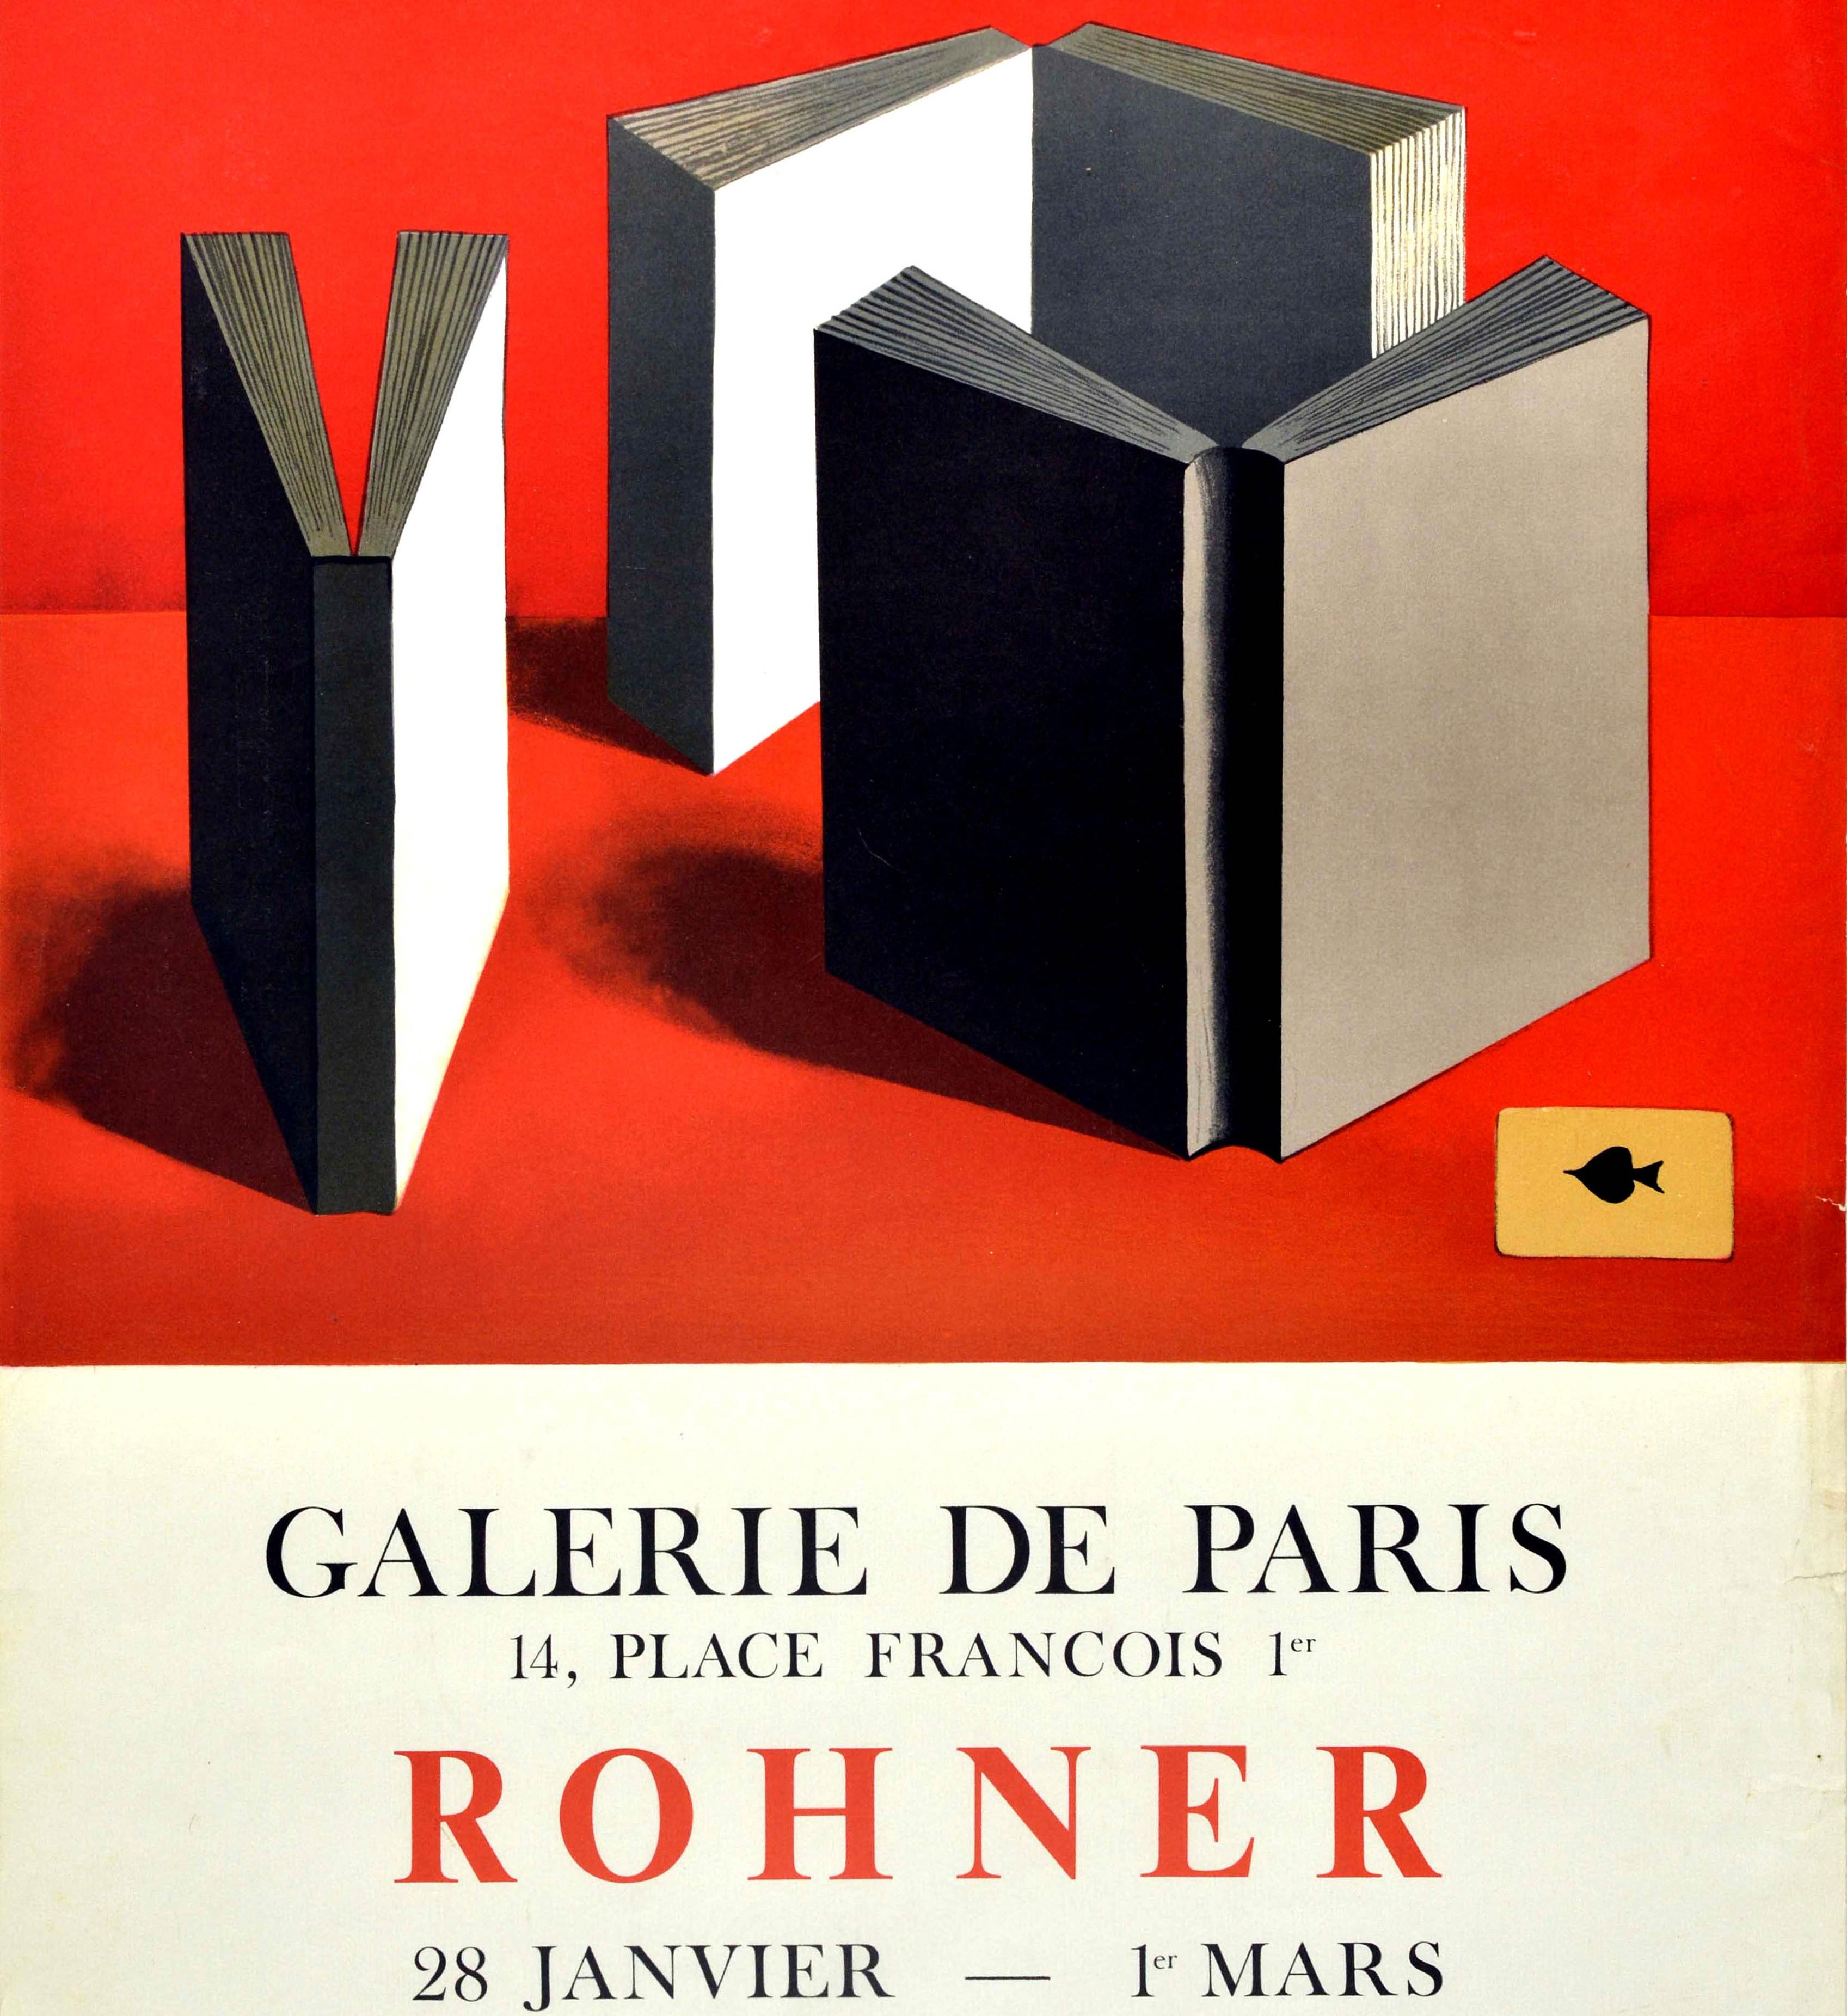 exhibition in paris book